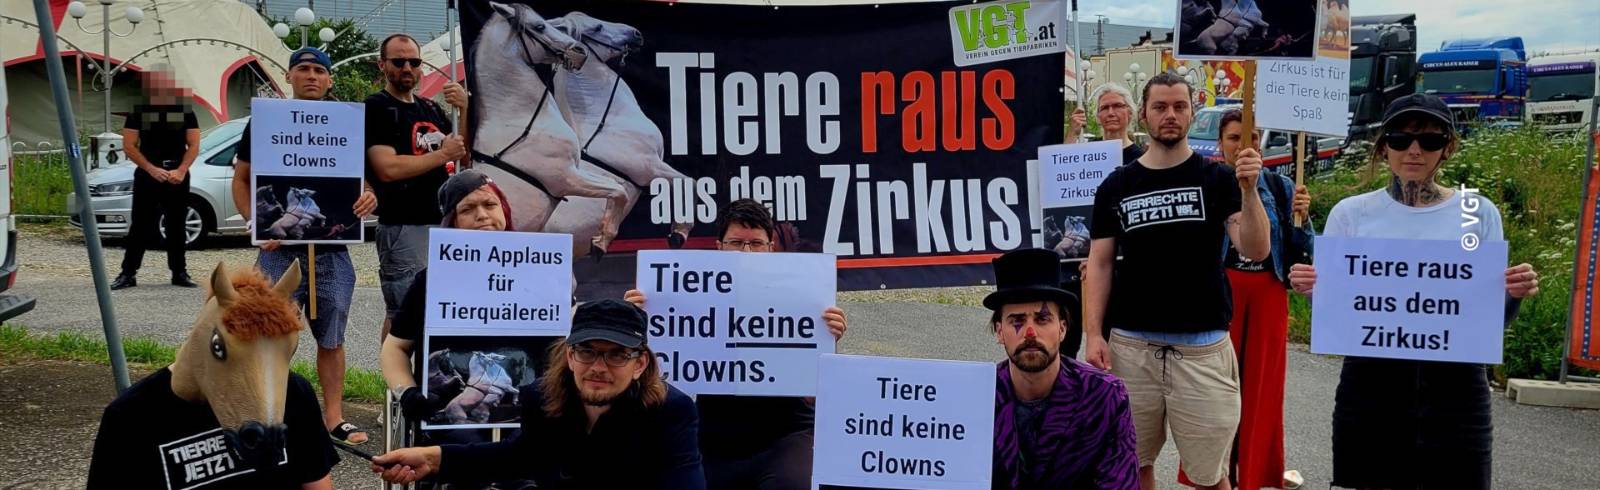 Bezirksflash: Vorwürfe gegen Zirkus am Margartengürtel